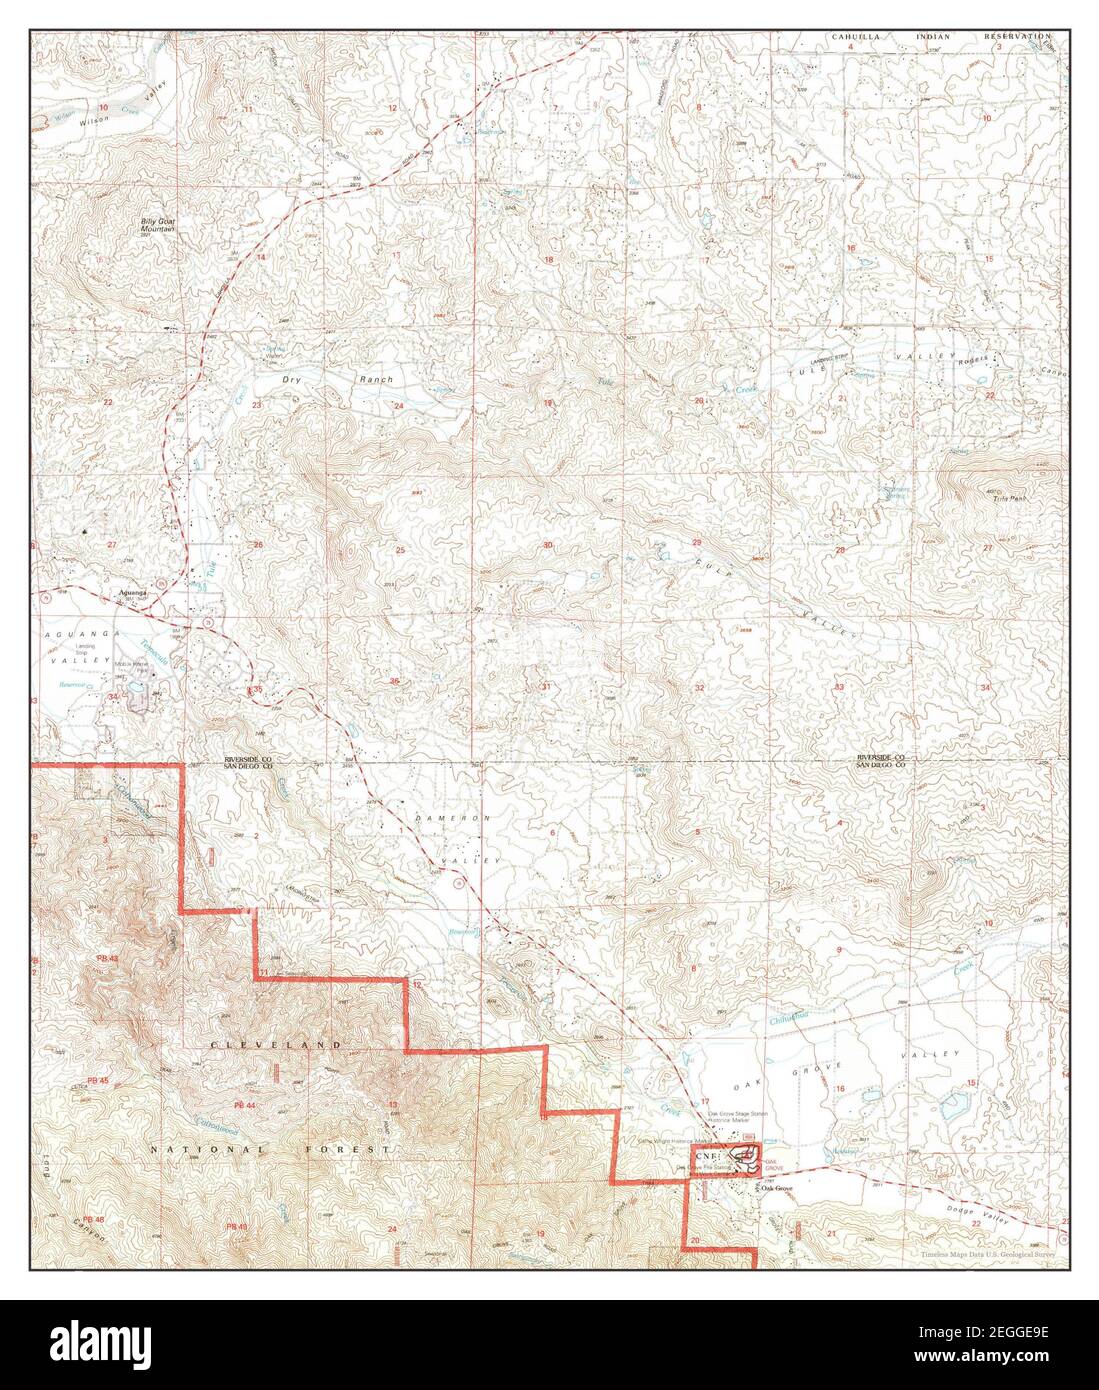 Aguanga, California, map 1997, 1:24000, United States of America by Timeless Maps, data U.S. Geological Survey Stock Photo